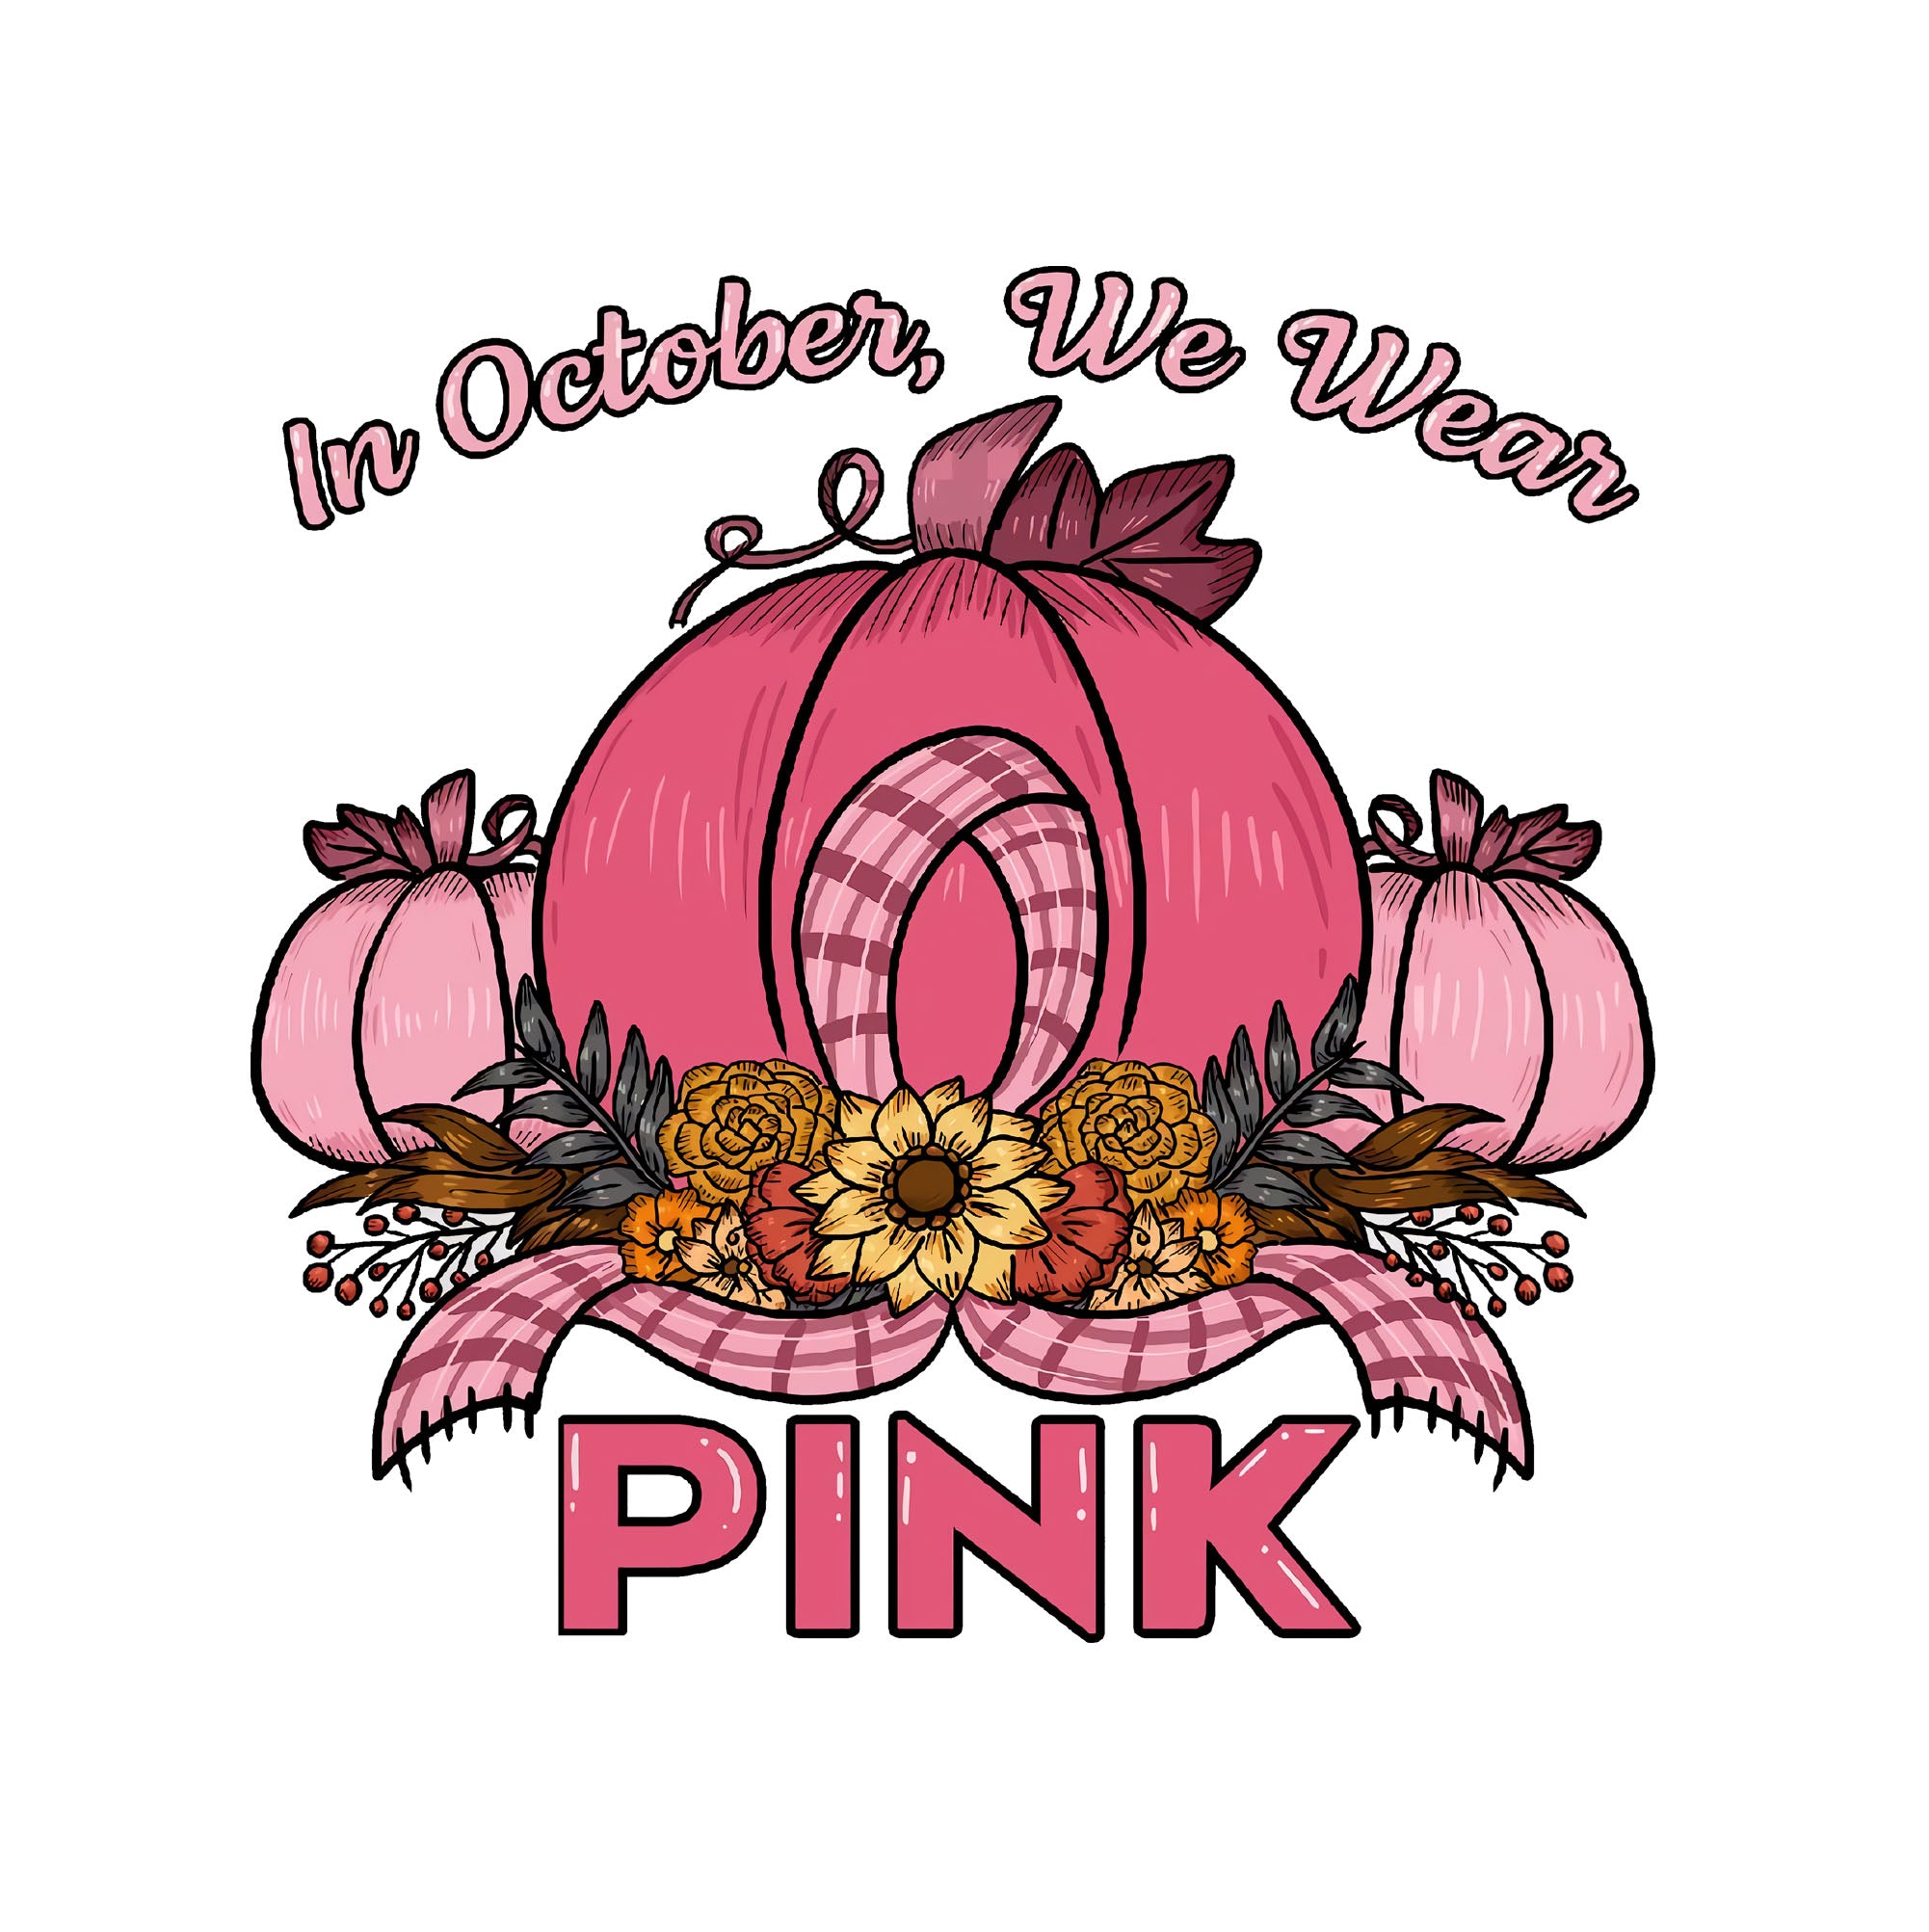 In October We Wear Pink png,In October We Wear Pink, Horror Movies Halloween PNG, Friends Horror Movie Creepy